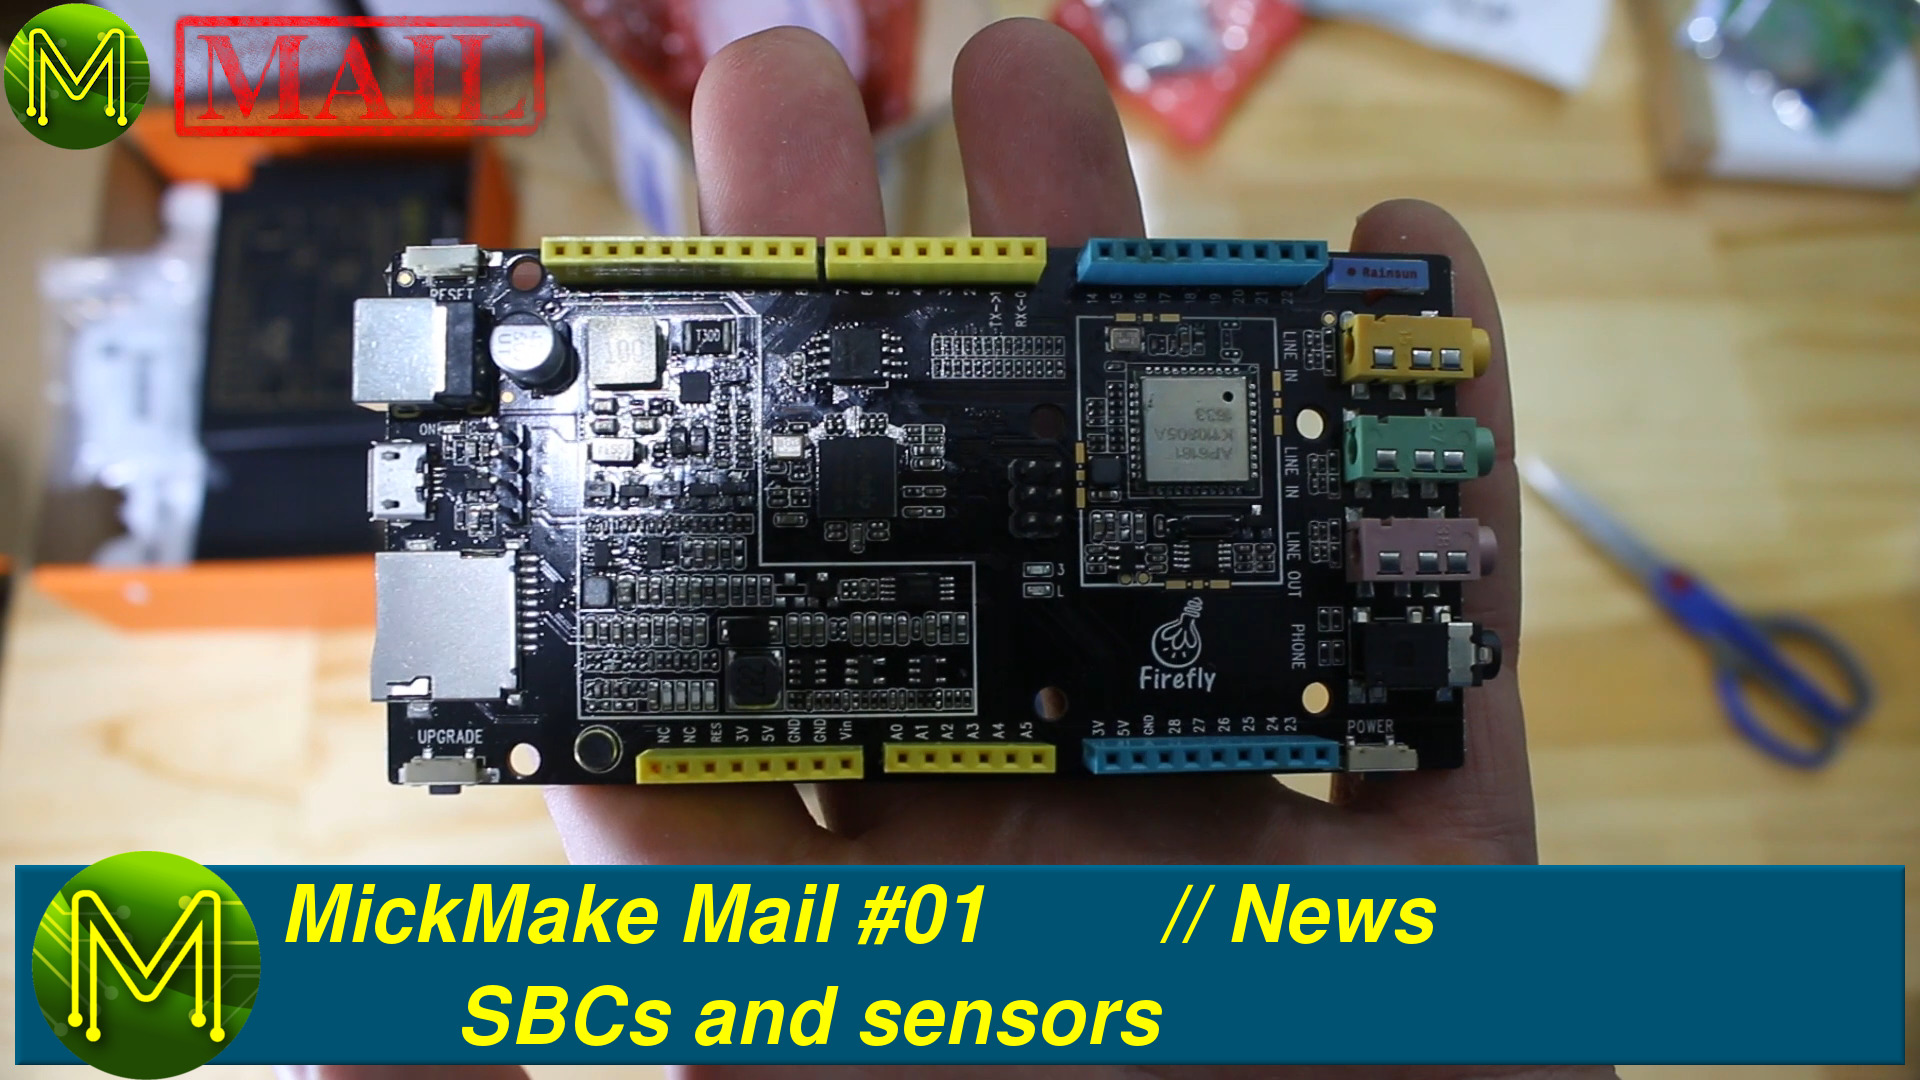 MickMake Mail #01: SBCs and sensors - News